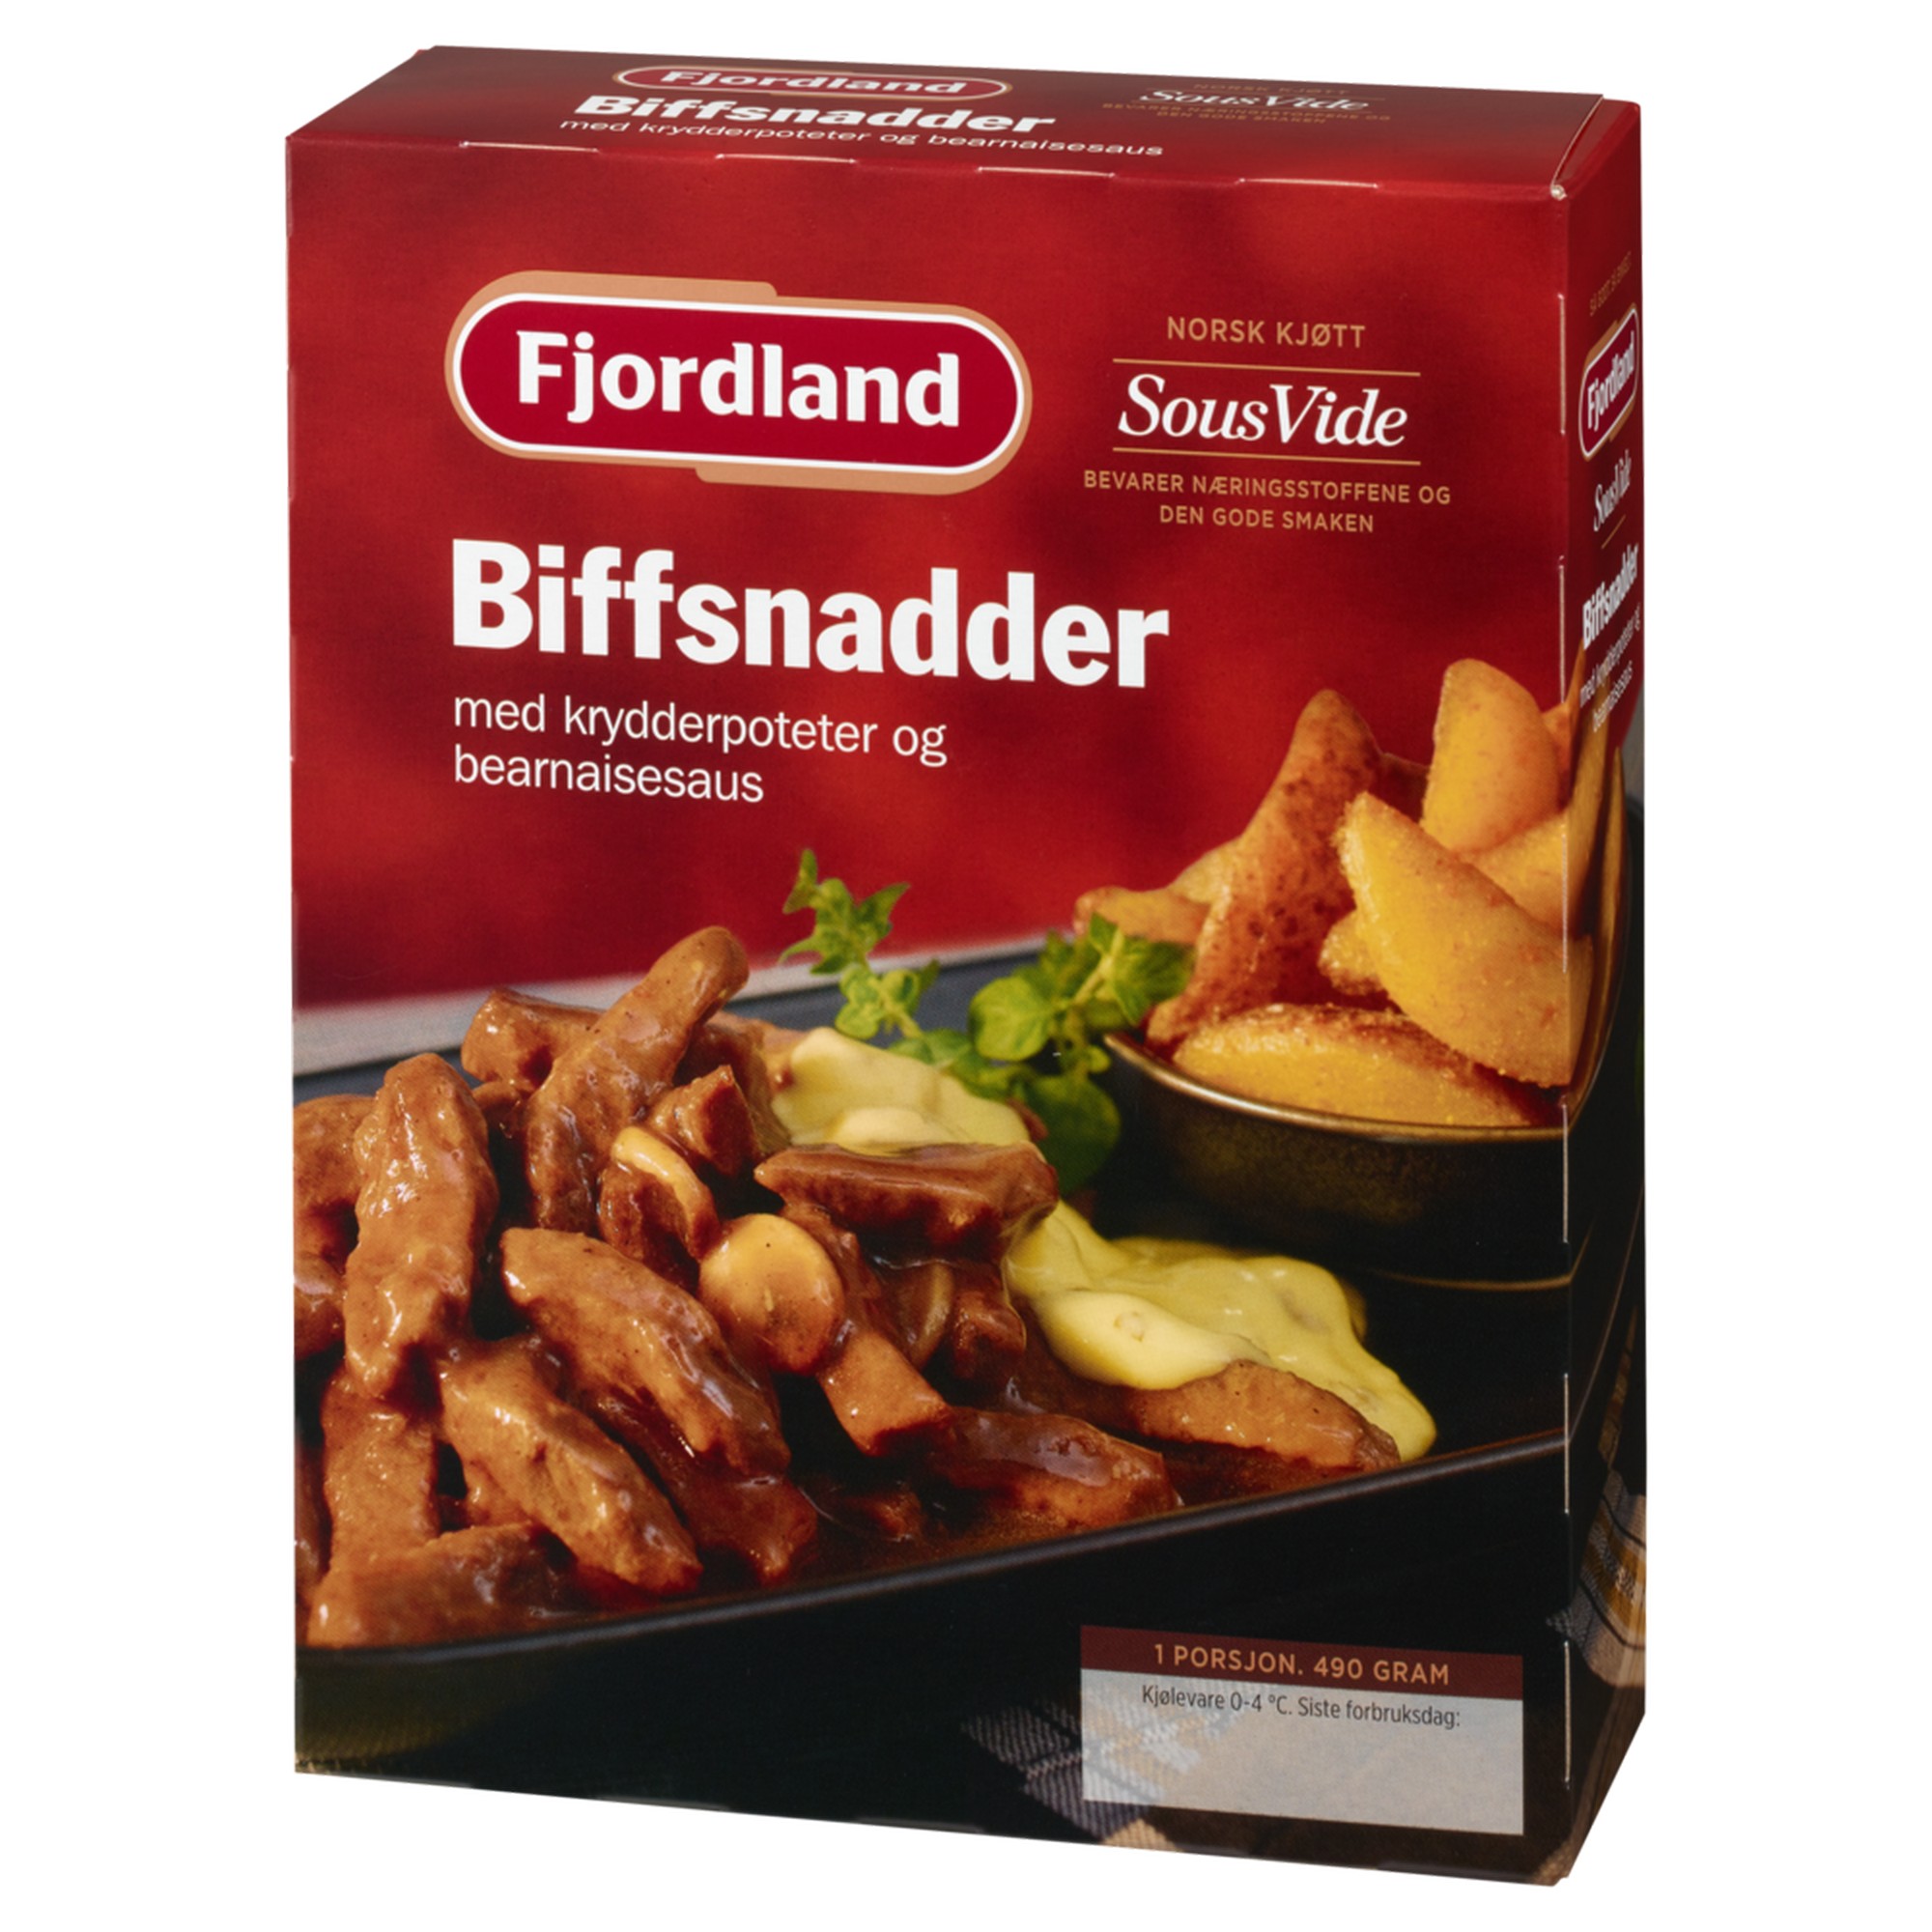 Fjordland beef strips